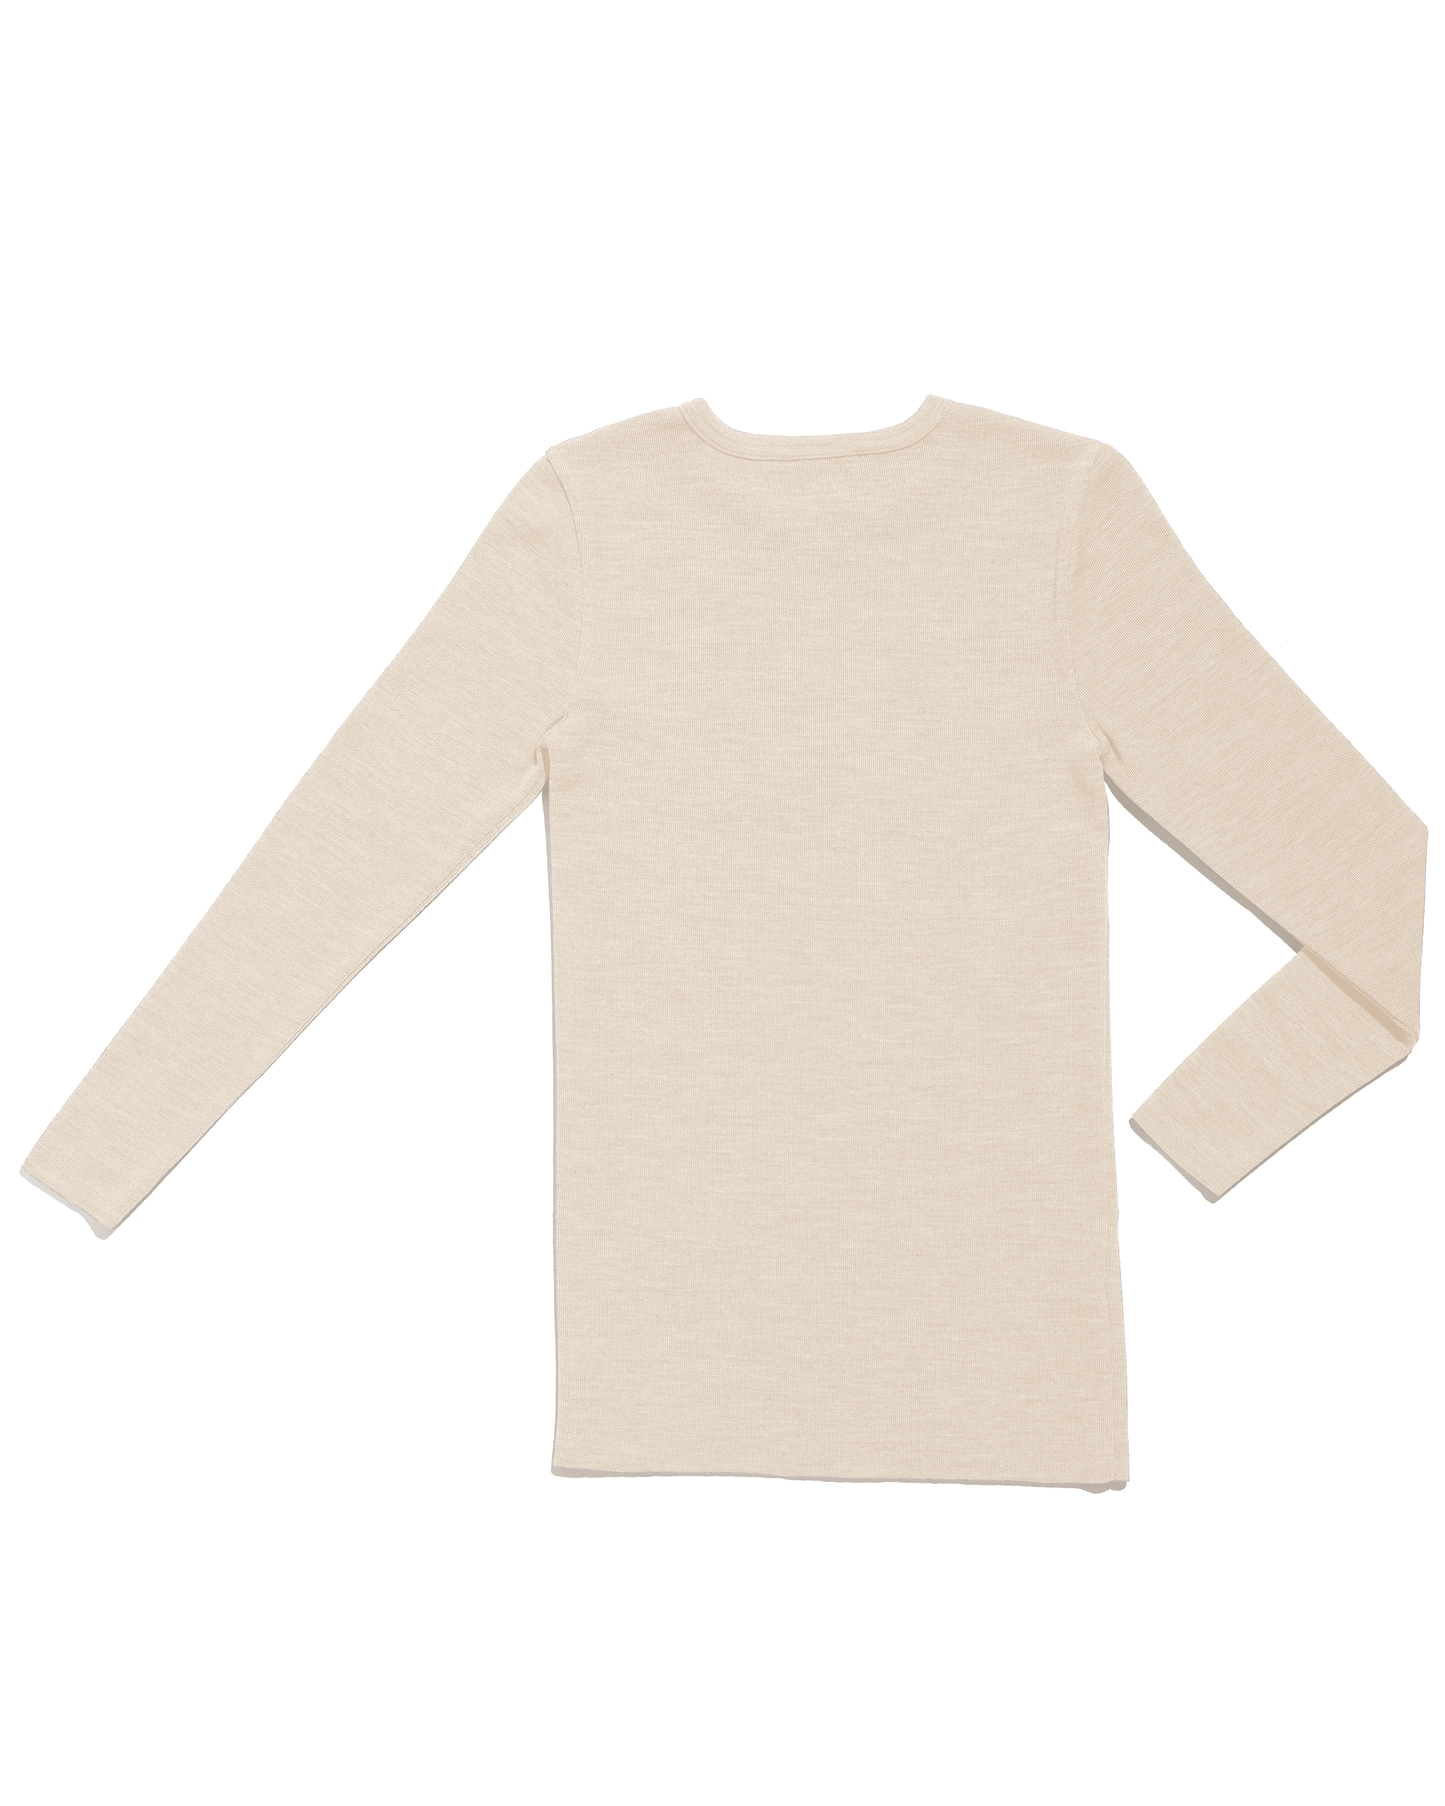 Long-sleeved sweater 100% ecru merino